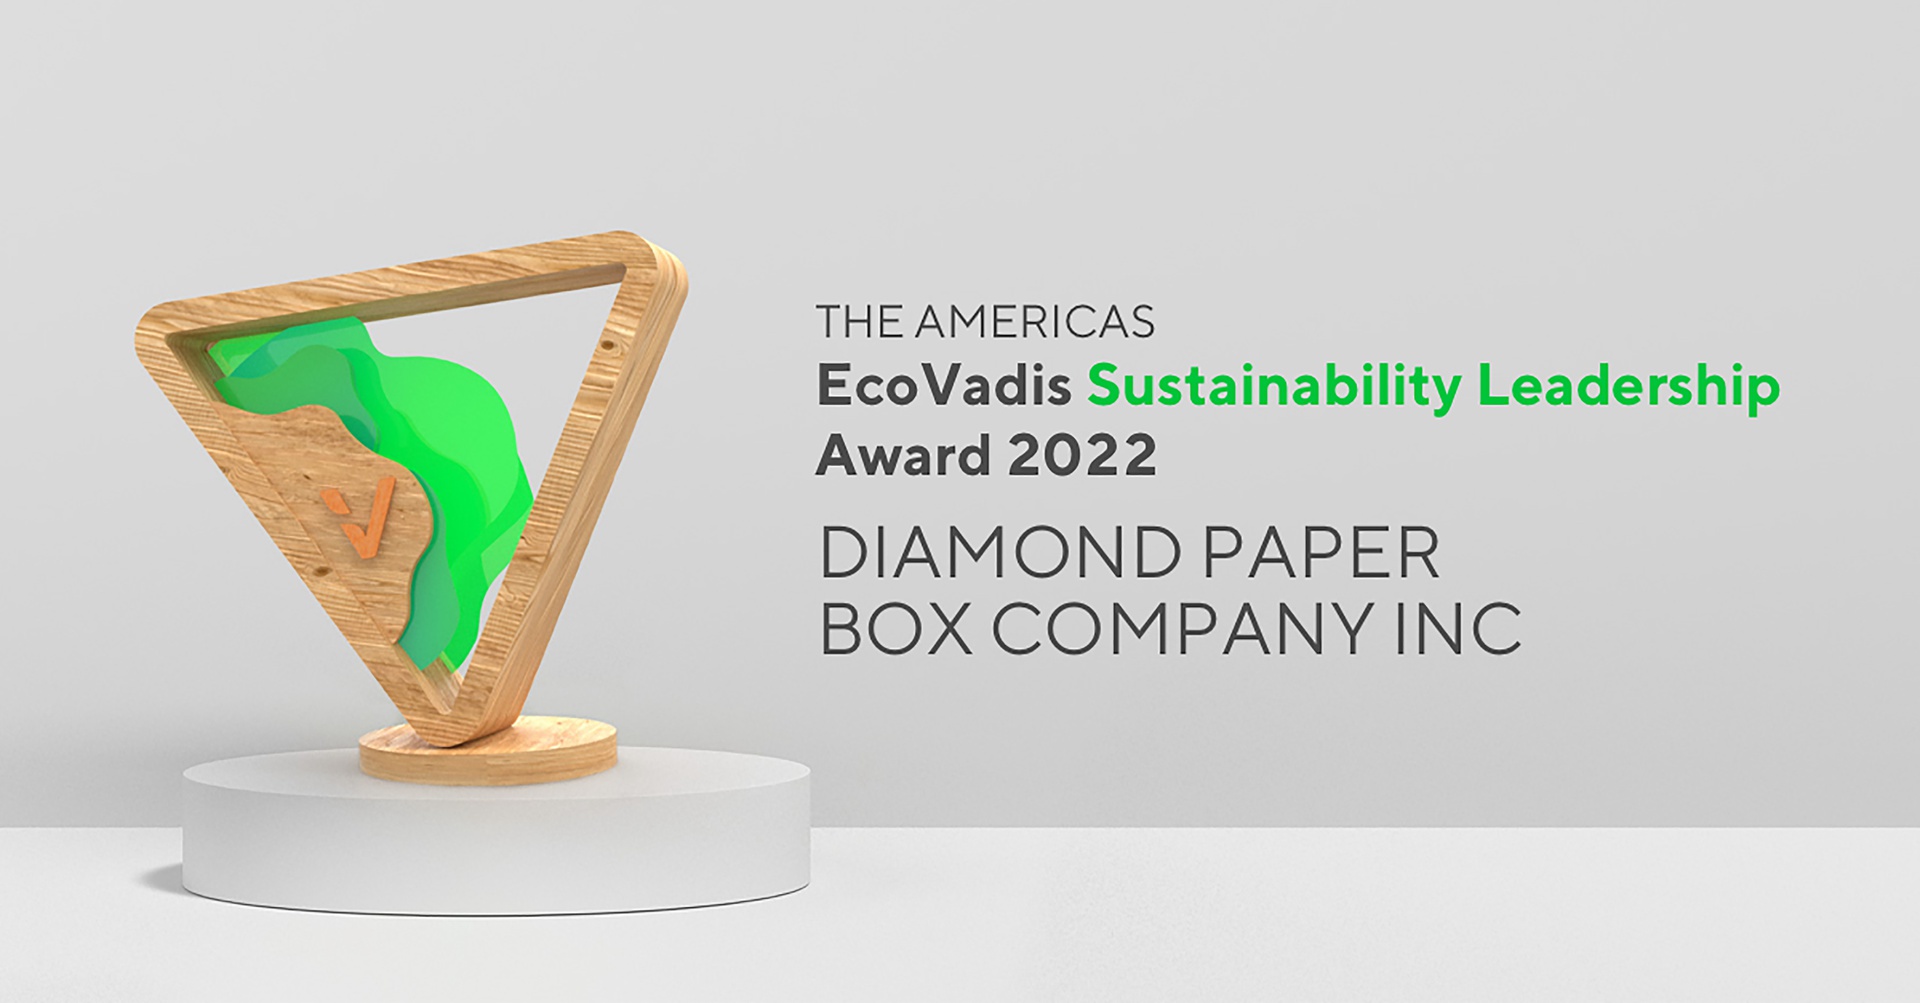 Diamond Packaging was an SME Regional Sustainability Leadership Award Winner in the 2022 EcoVadis Sustainability Leadership Awards